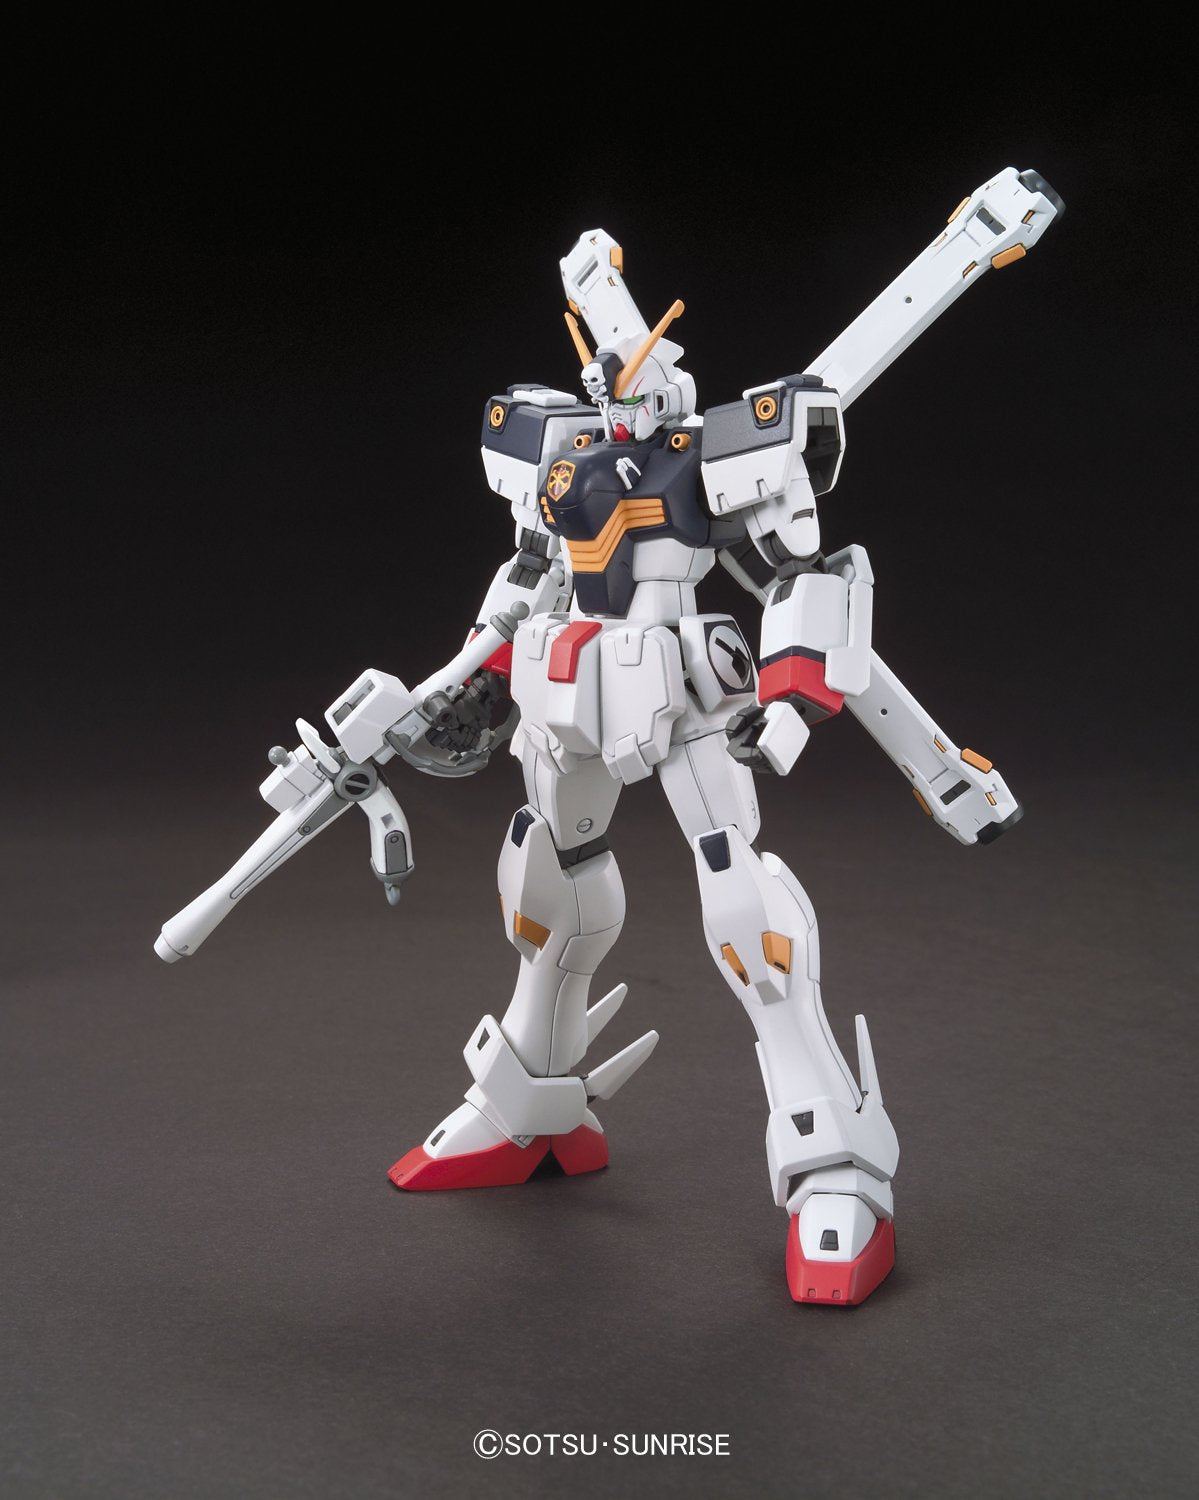 HGUC #187 Crossbone Gundam X1 1/144 Model Kit